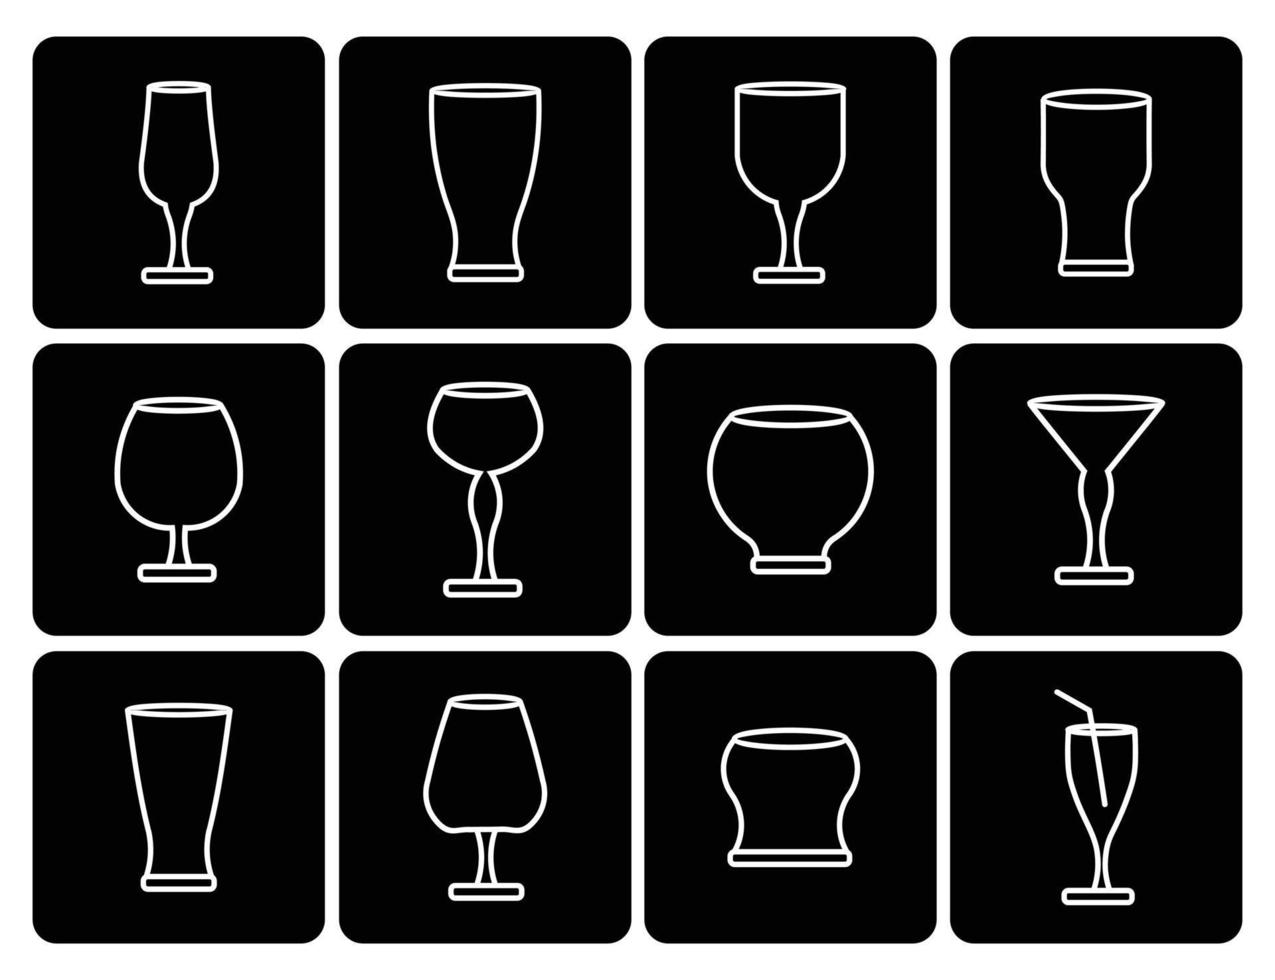 cocktailglas lijn iconen platte set, overzicht vector symbool collectie, set glas bevat pictogrammen plat